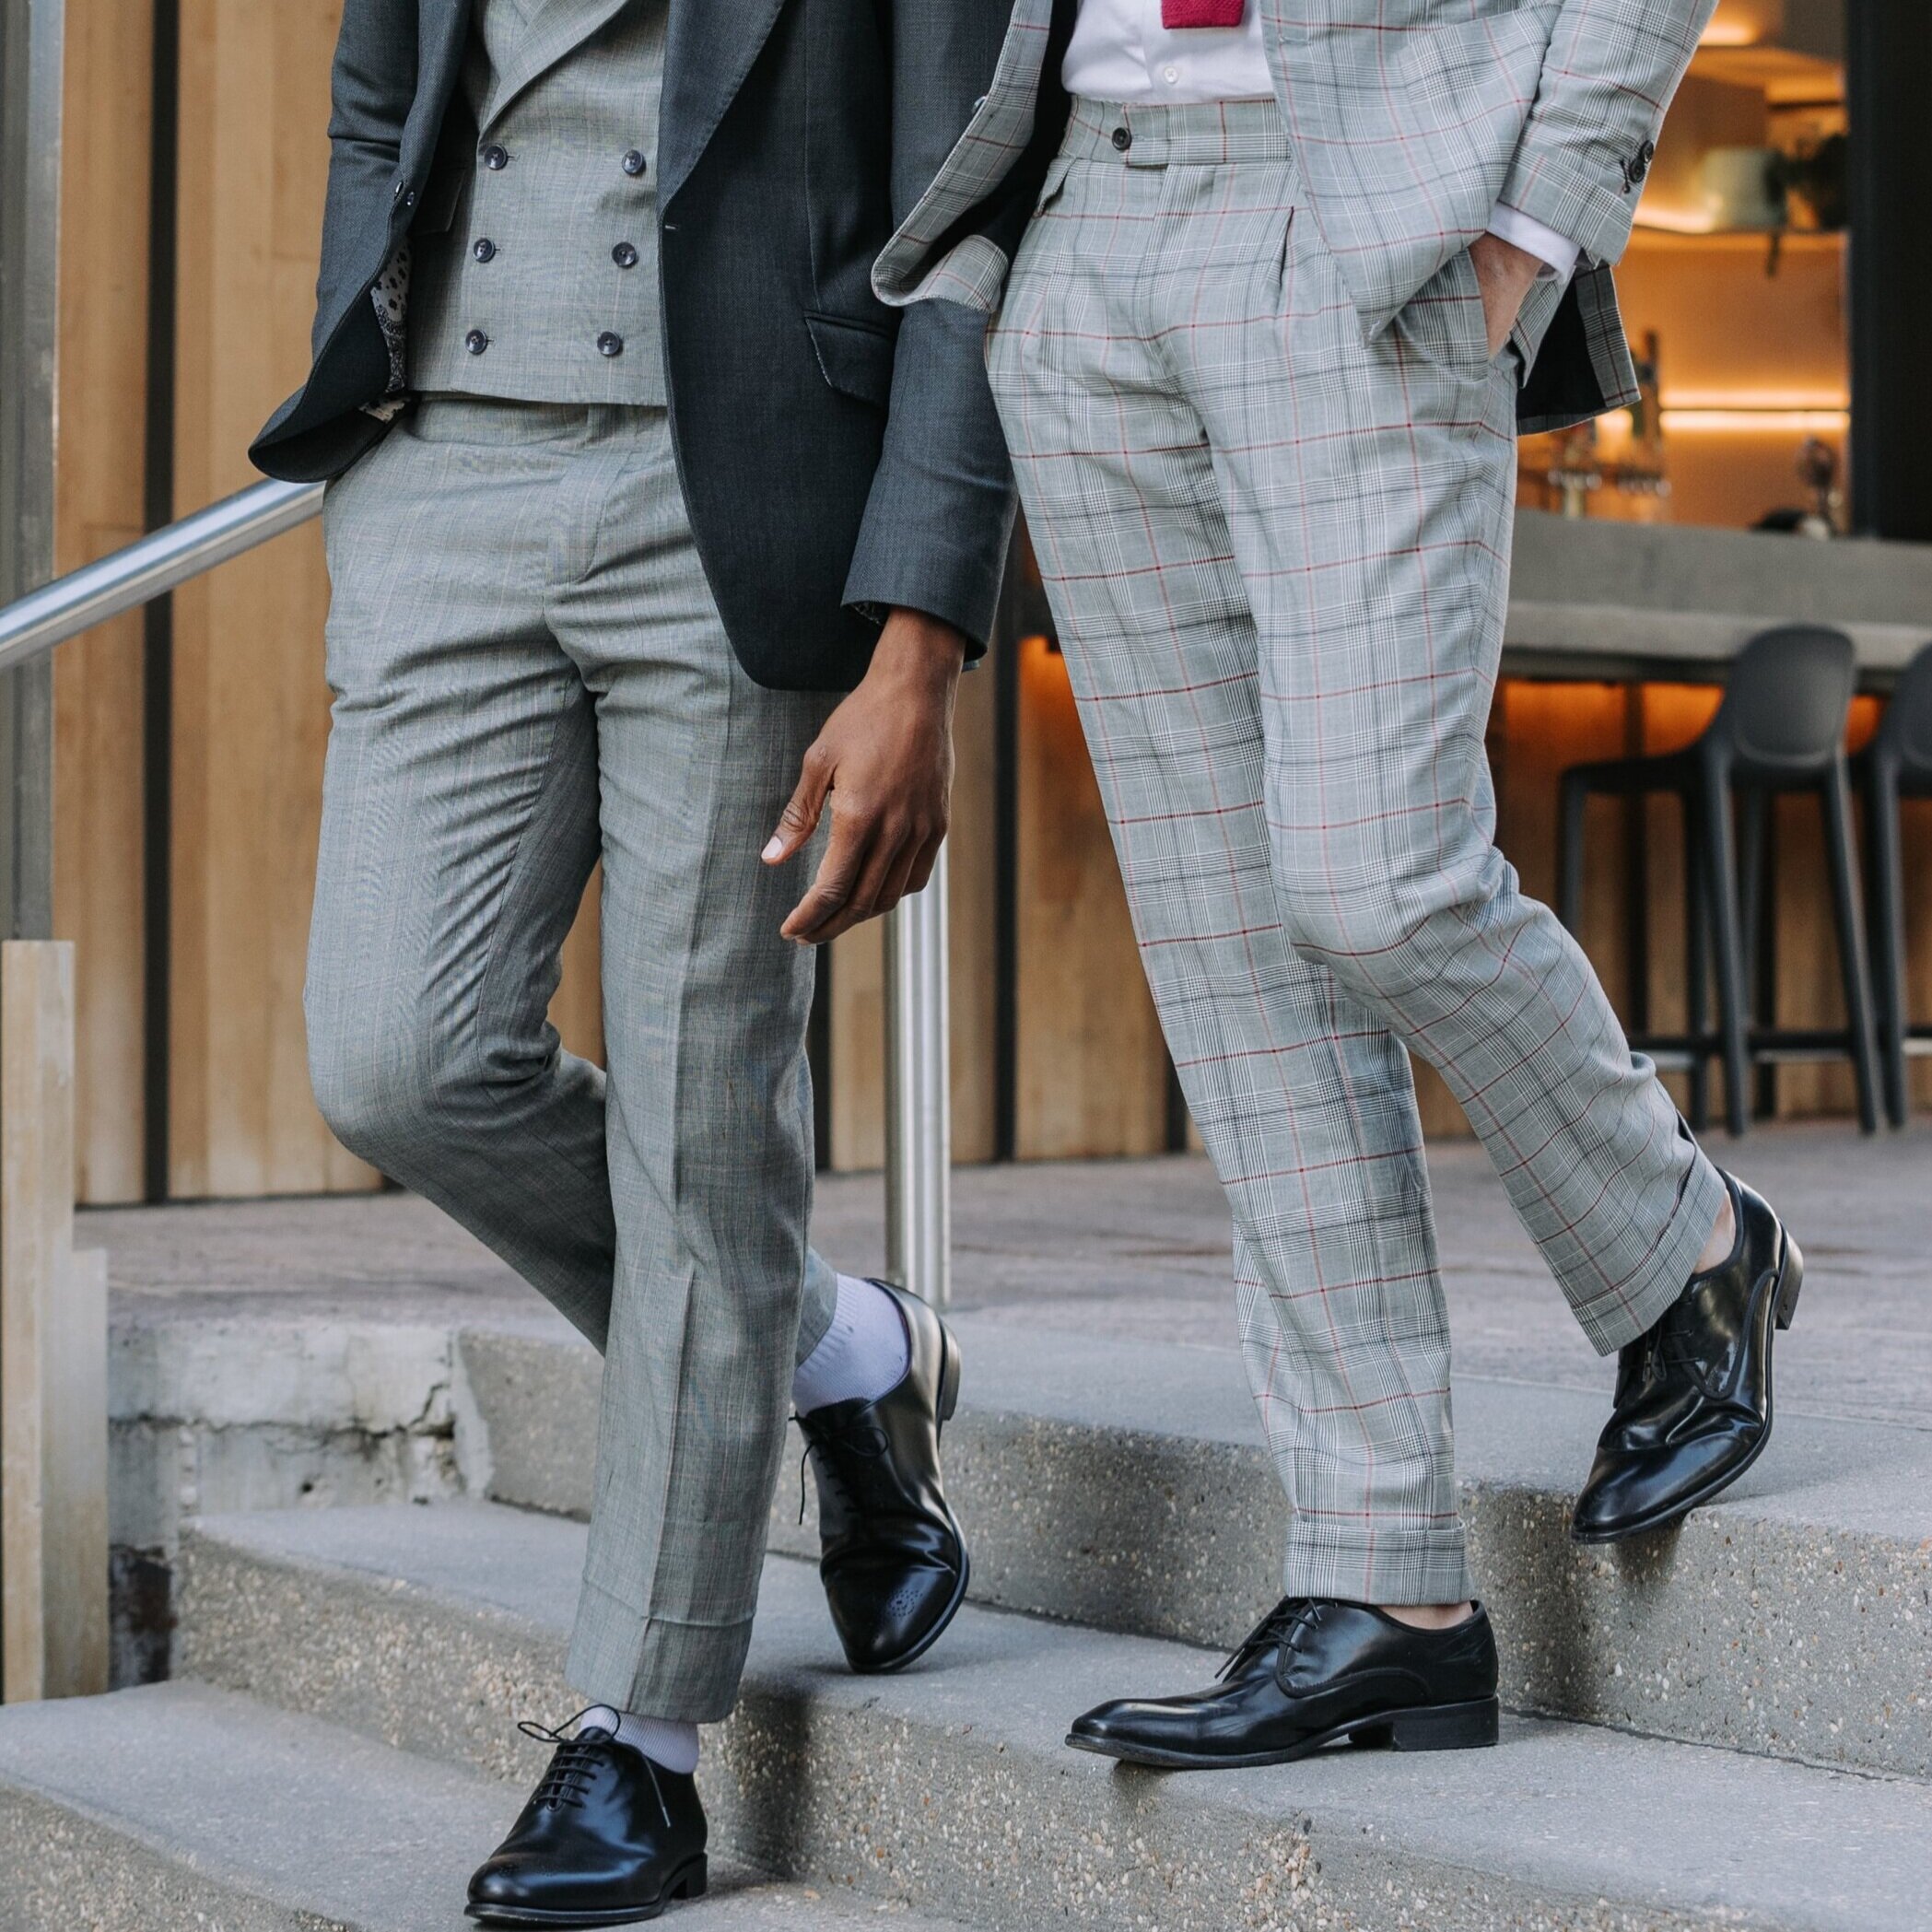 Suit Style: Lululemon Men's Pants Review - Butler Luxury